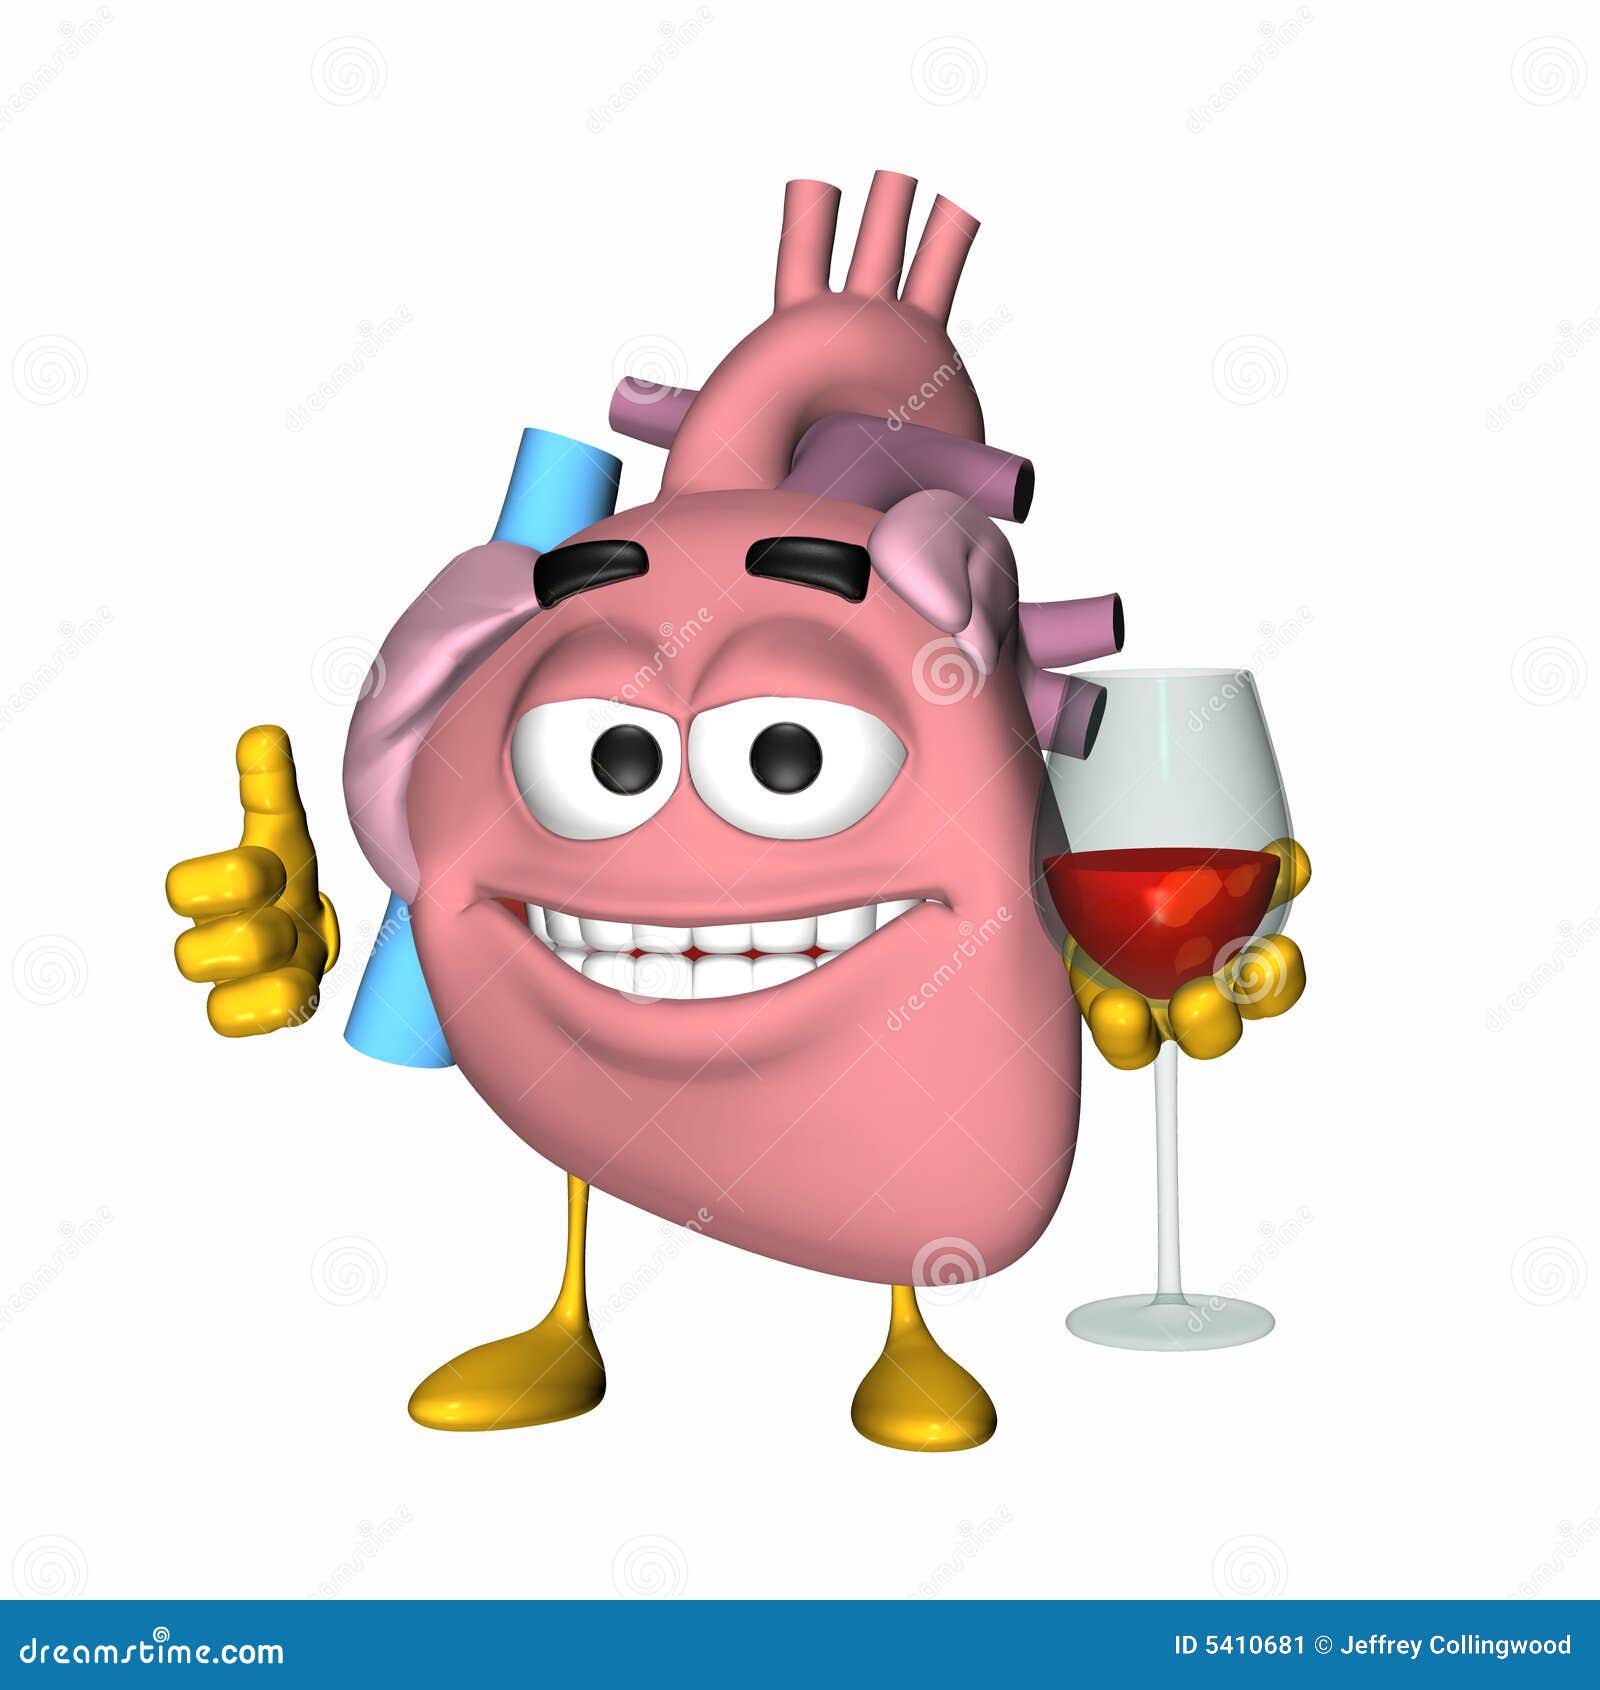 smiley aorta - glass of wine